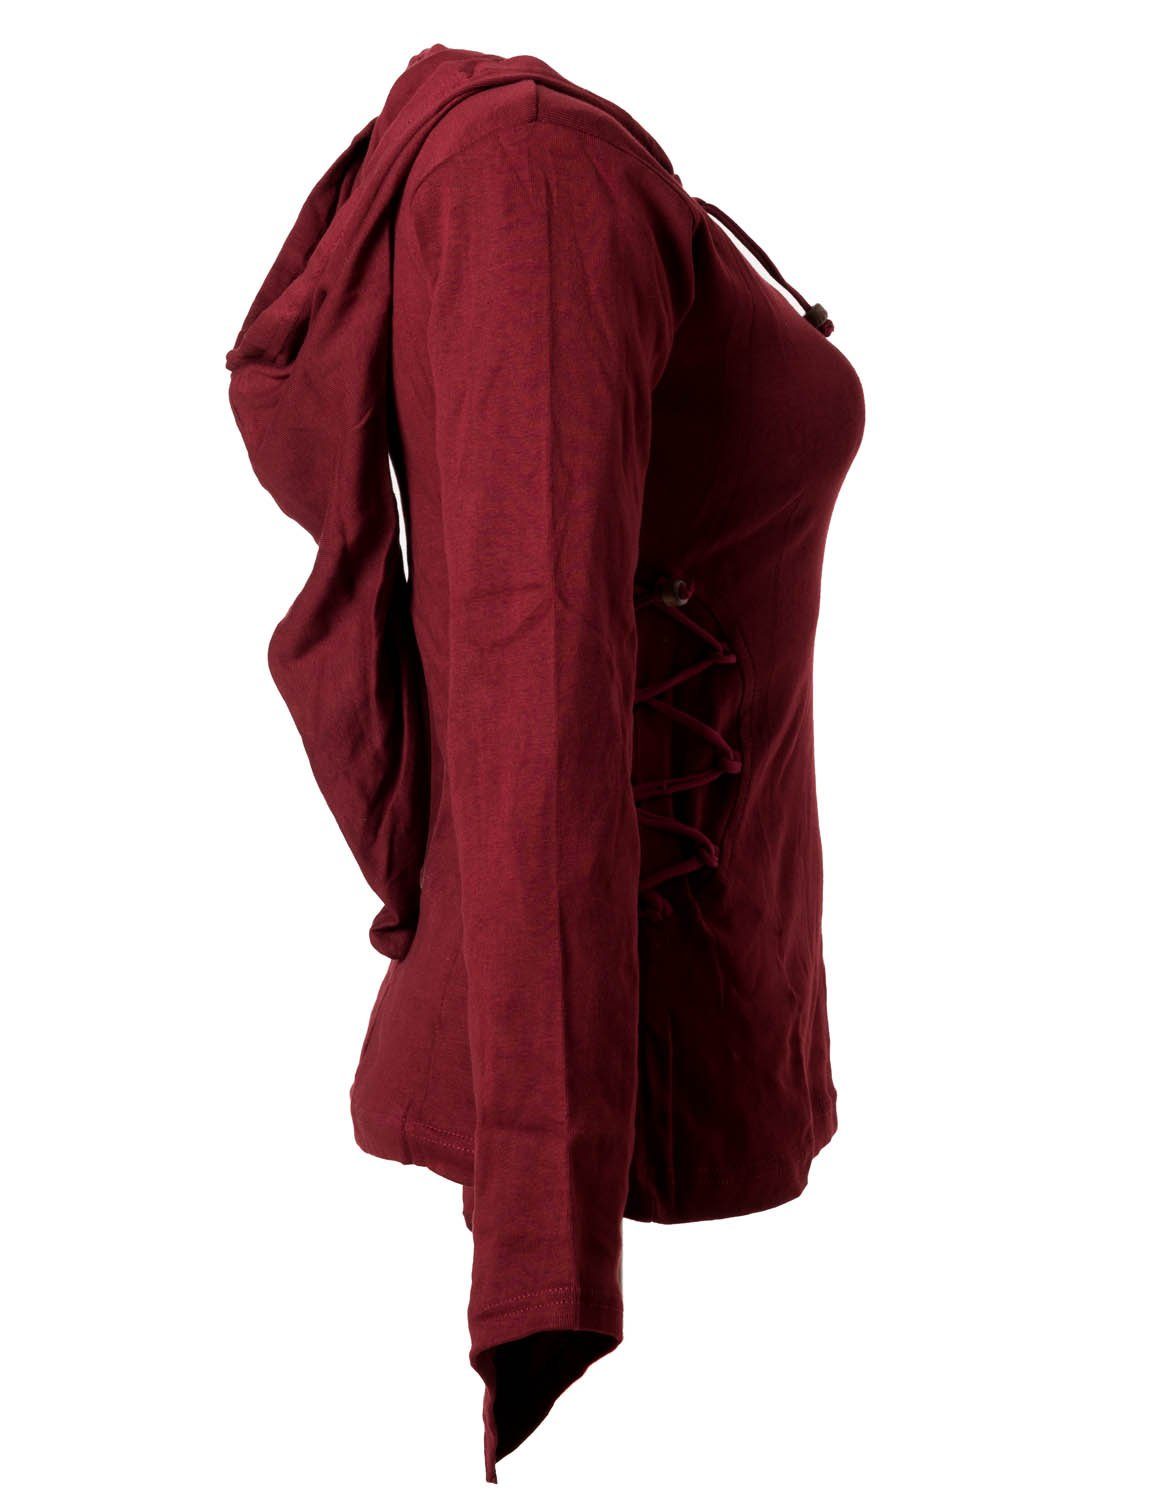 Vishes Kapuzenshirt Elfenshirt Zipfelkapuze dunkelrot Gothik Bändern zum Style und Ethno, Schnüren Hoody